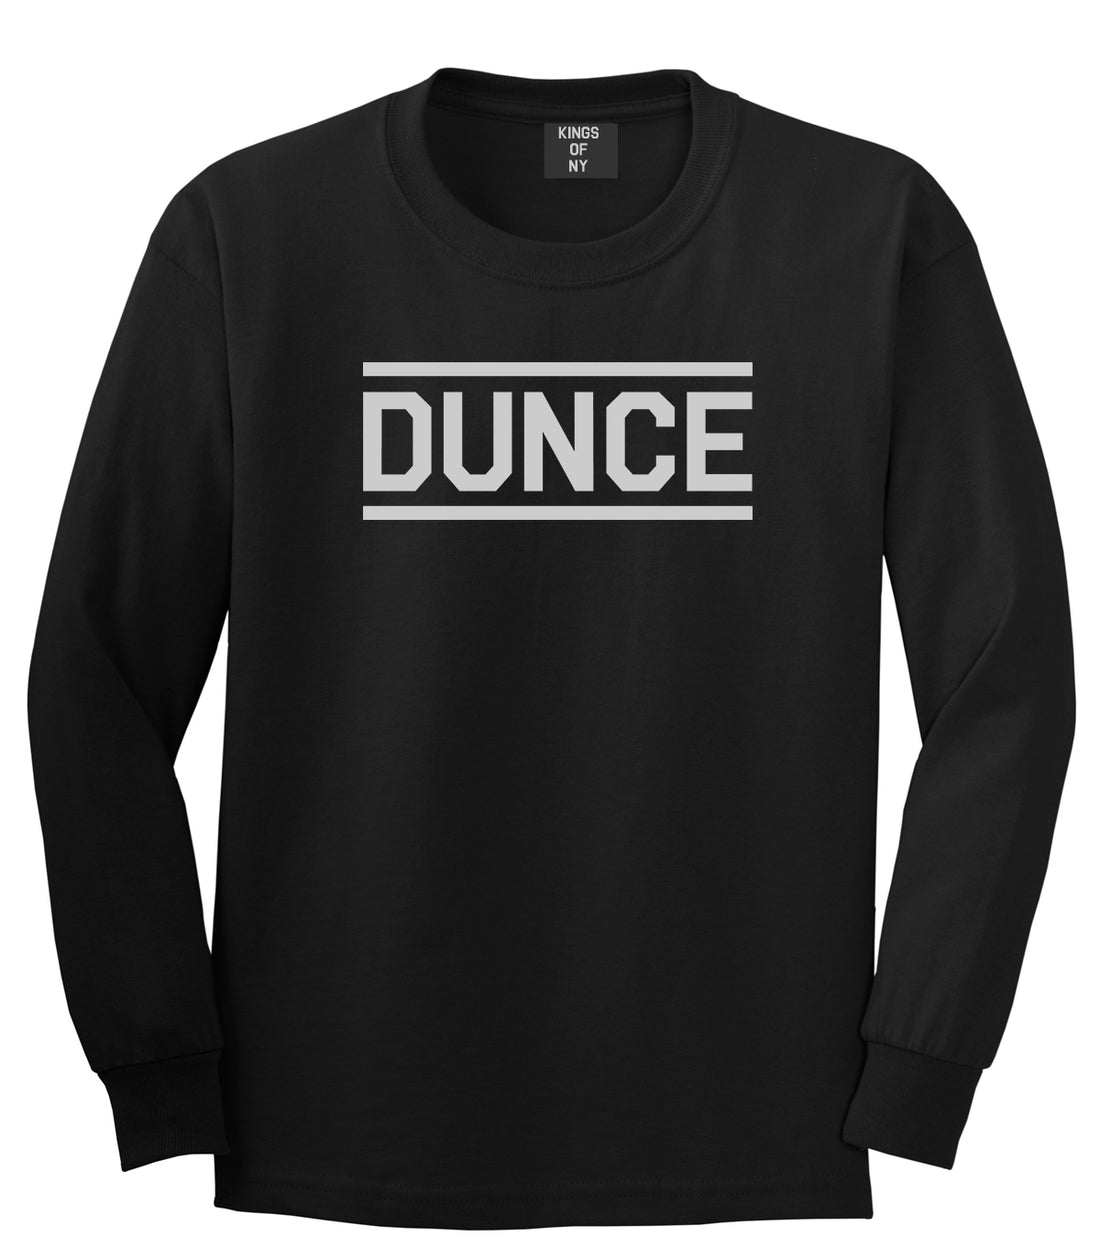 Dunce Funny Mens Black Long Sleeve T-Shirt by Kings Of NY